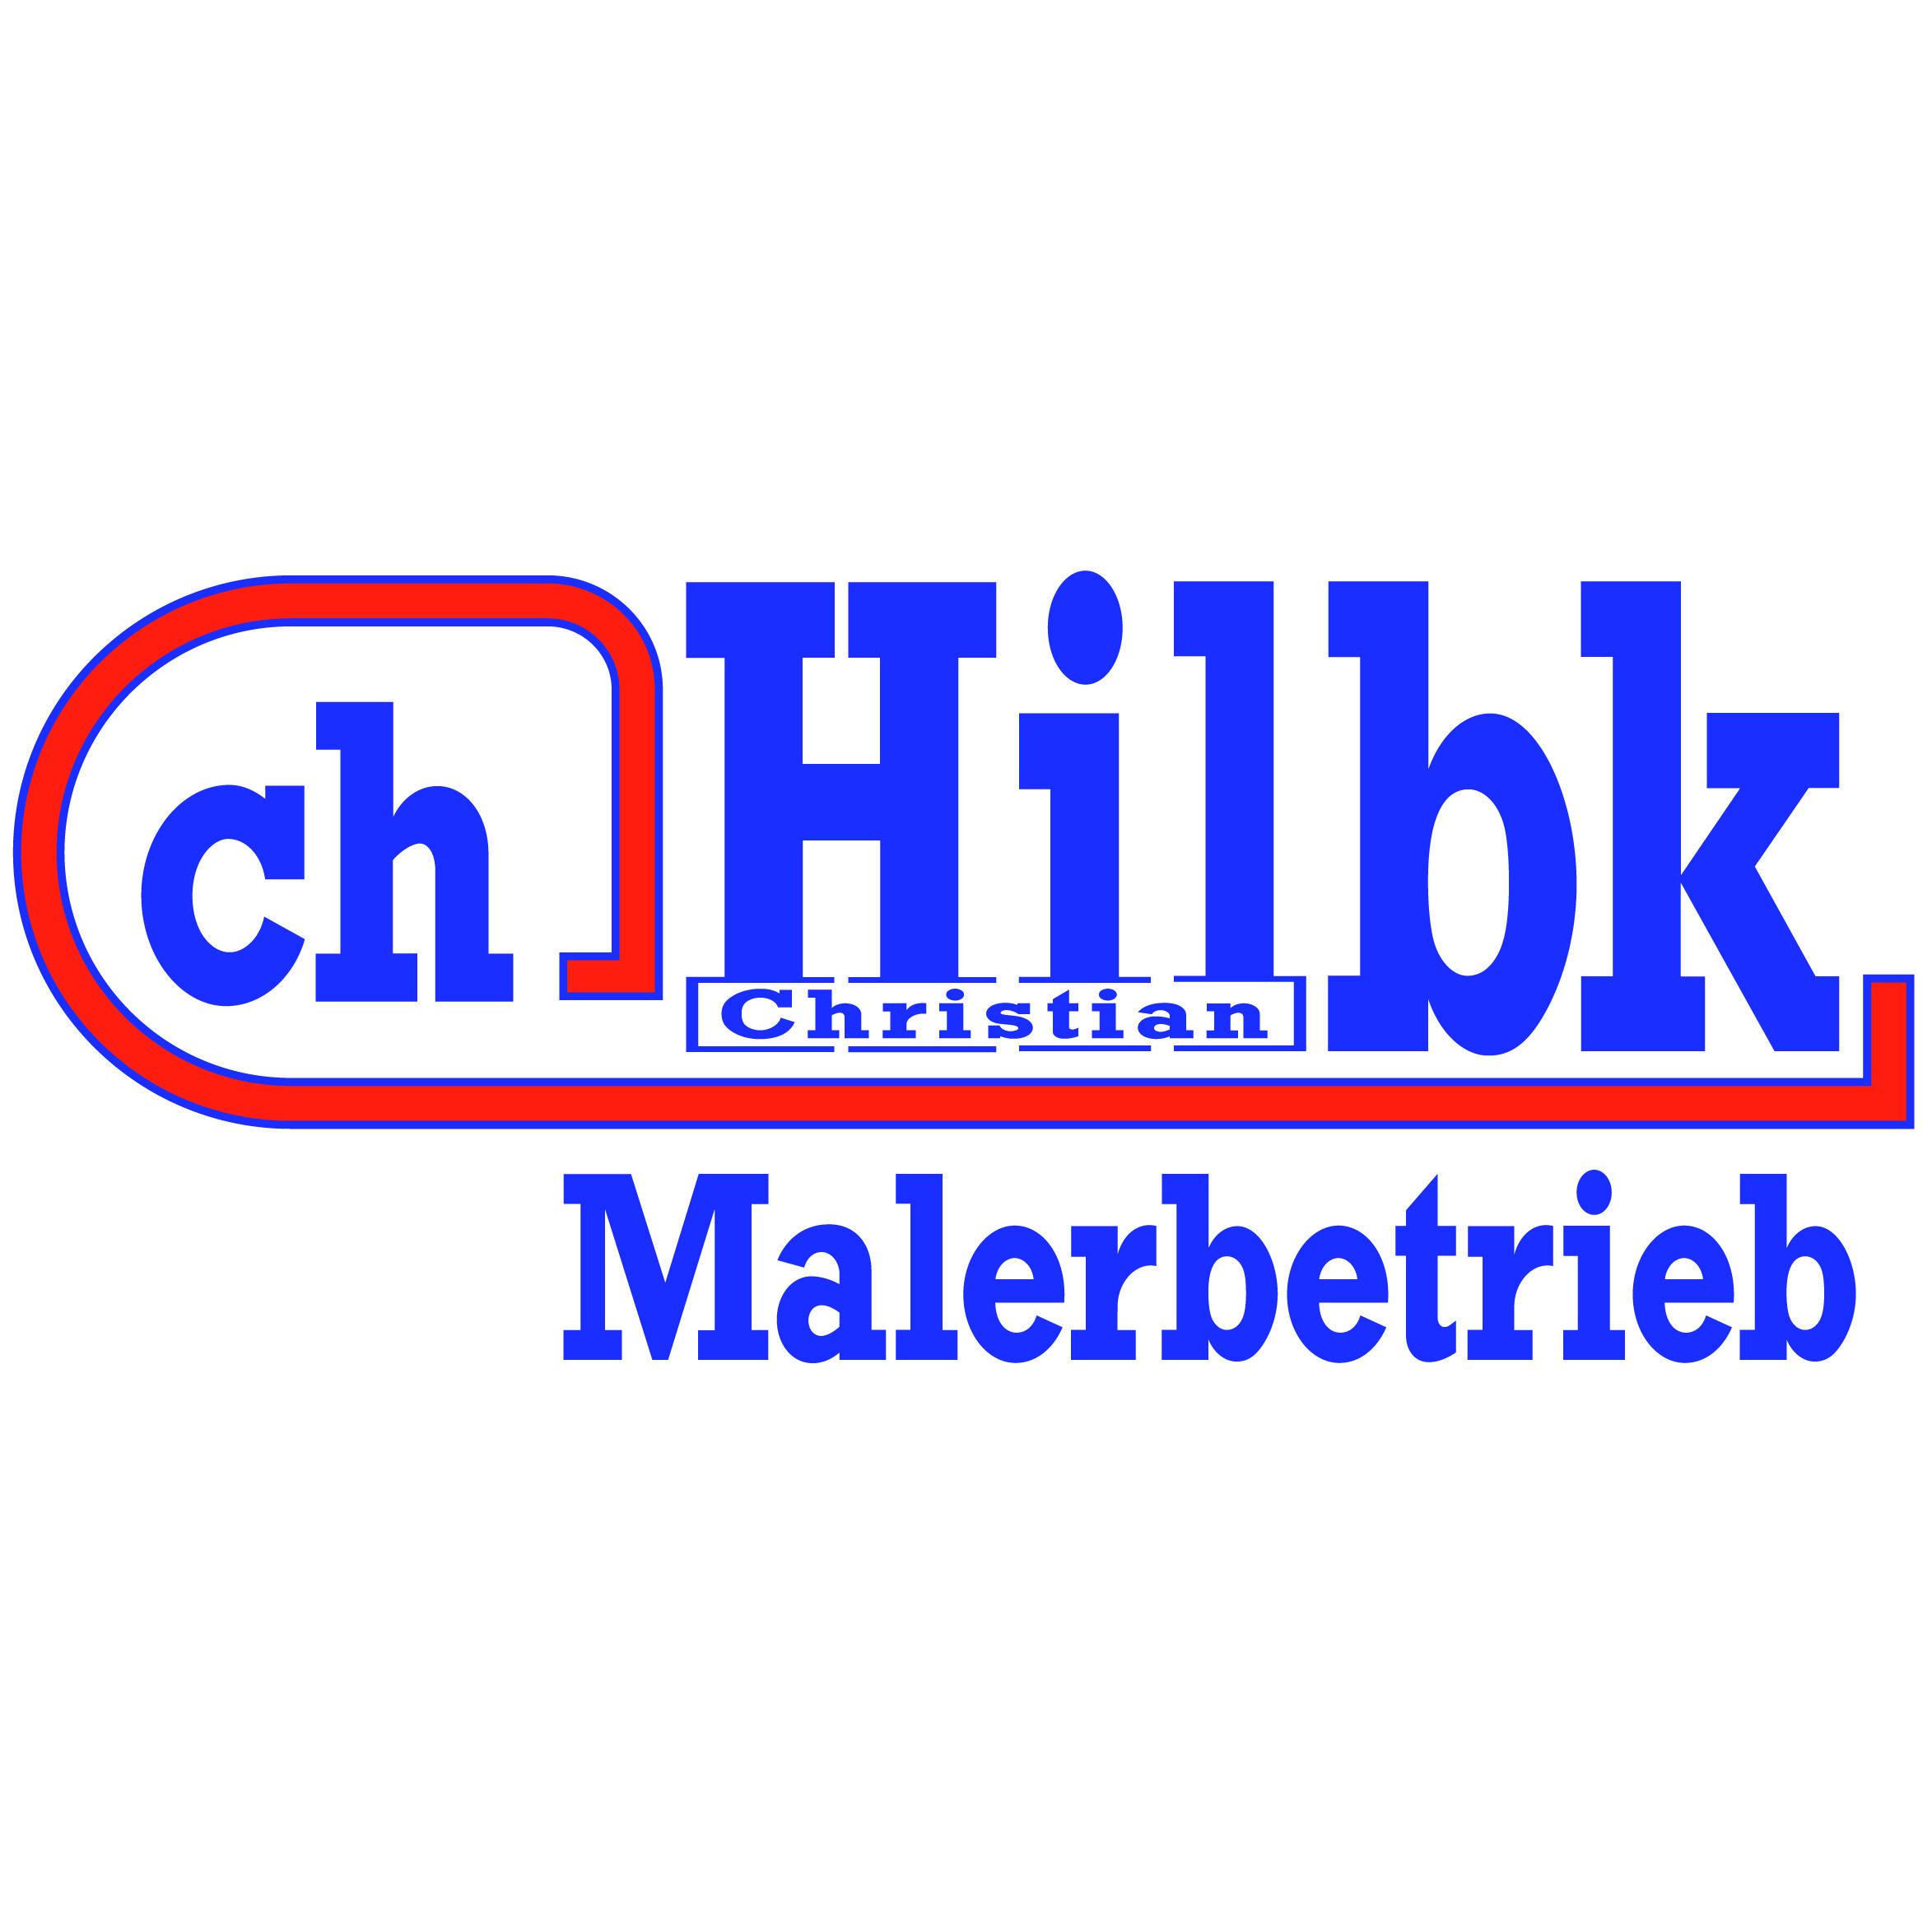 Malerbetrieb Christian Hilbk Logo